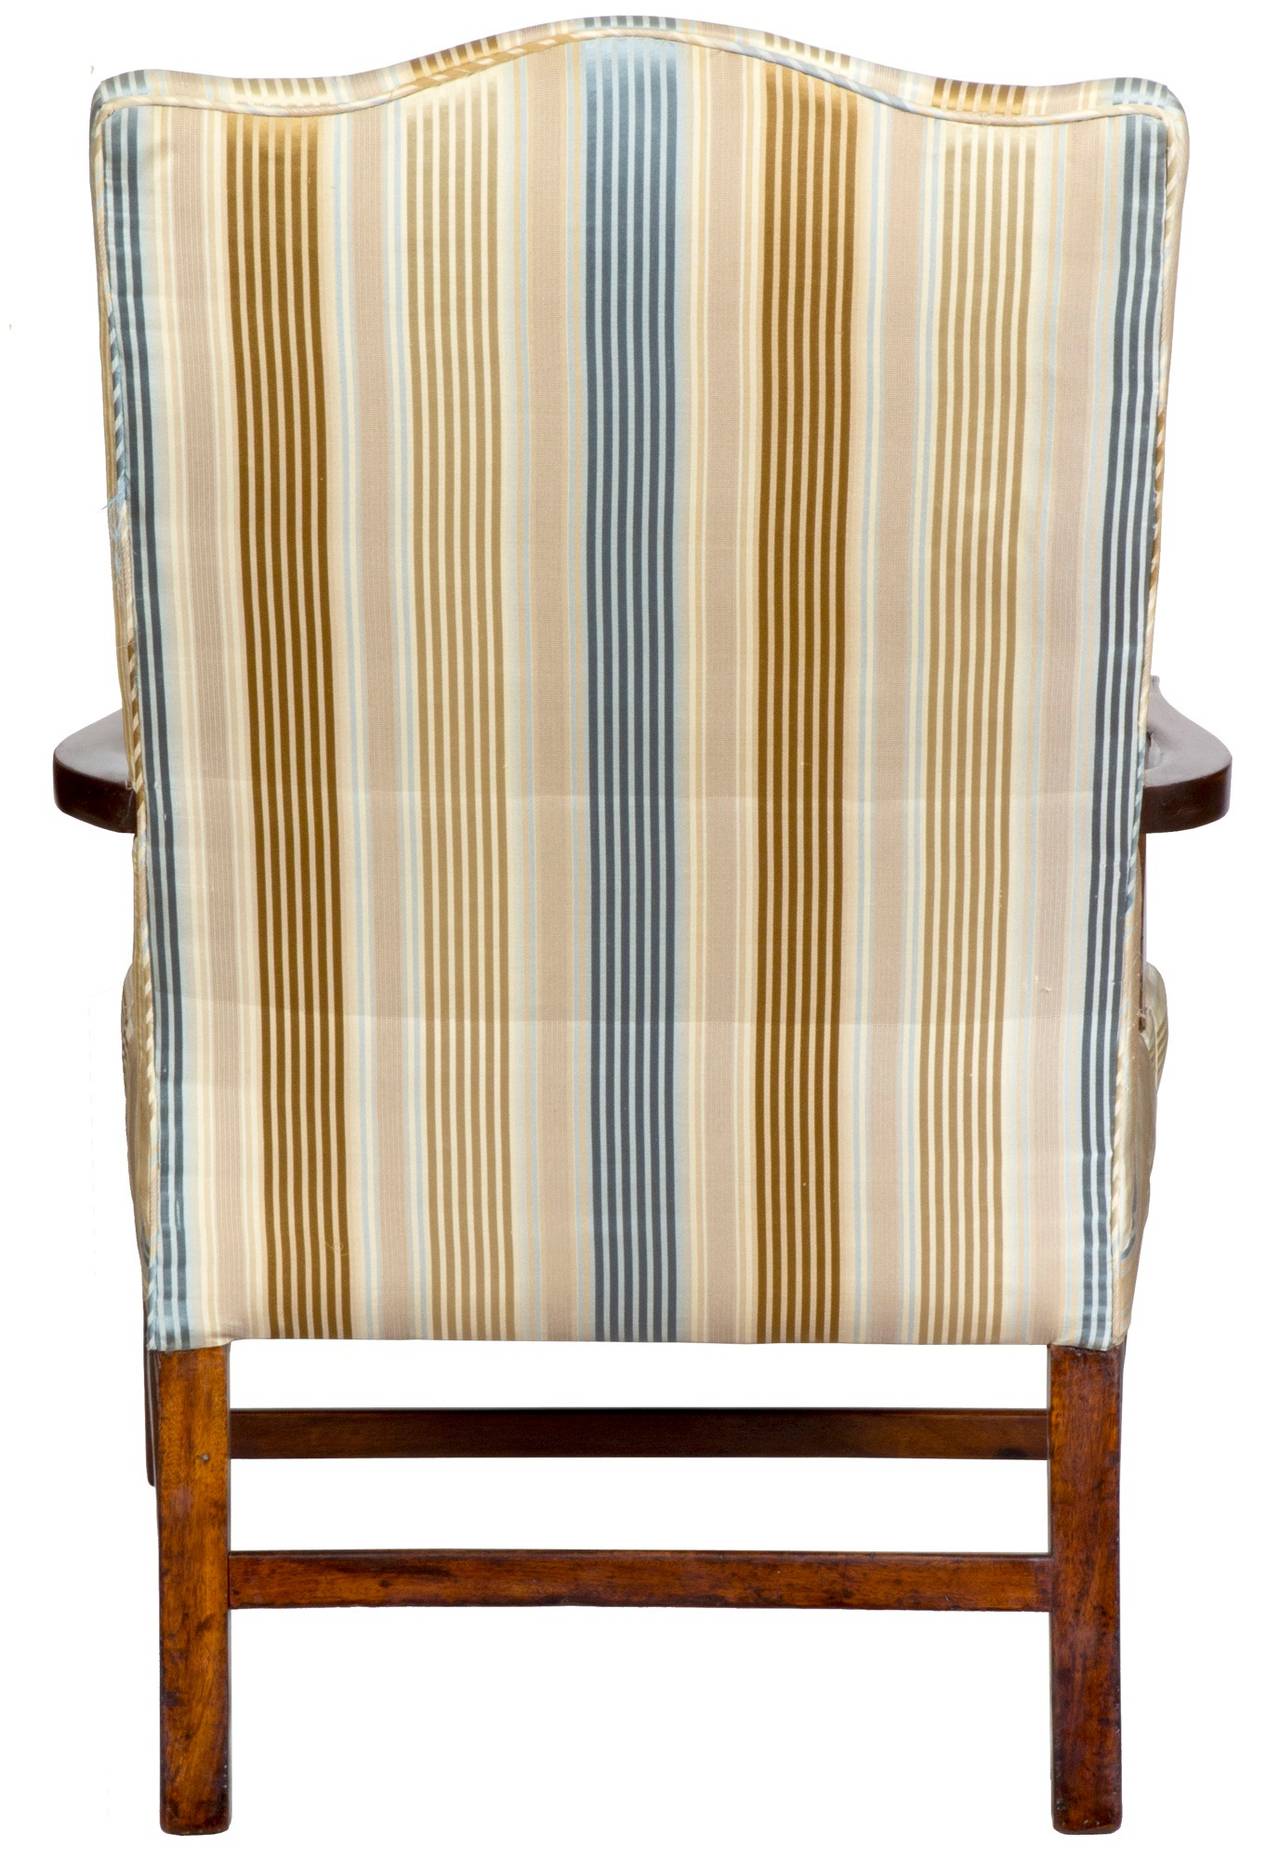 American Mahogany Federal Lolling Chair, Boston or North Shore, circa 1800-1810